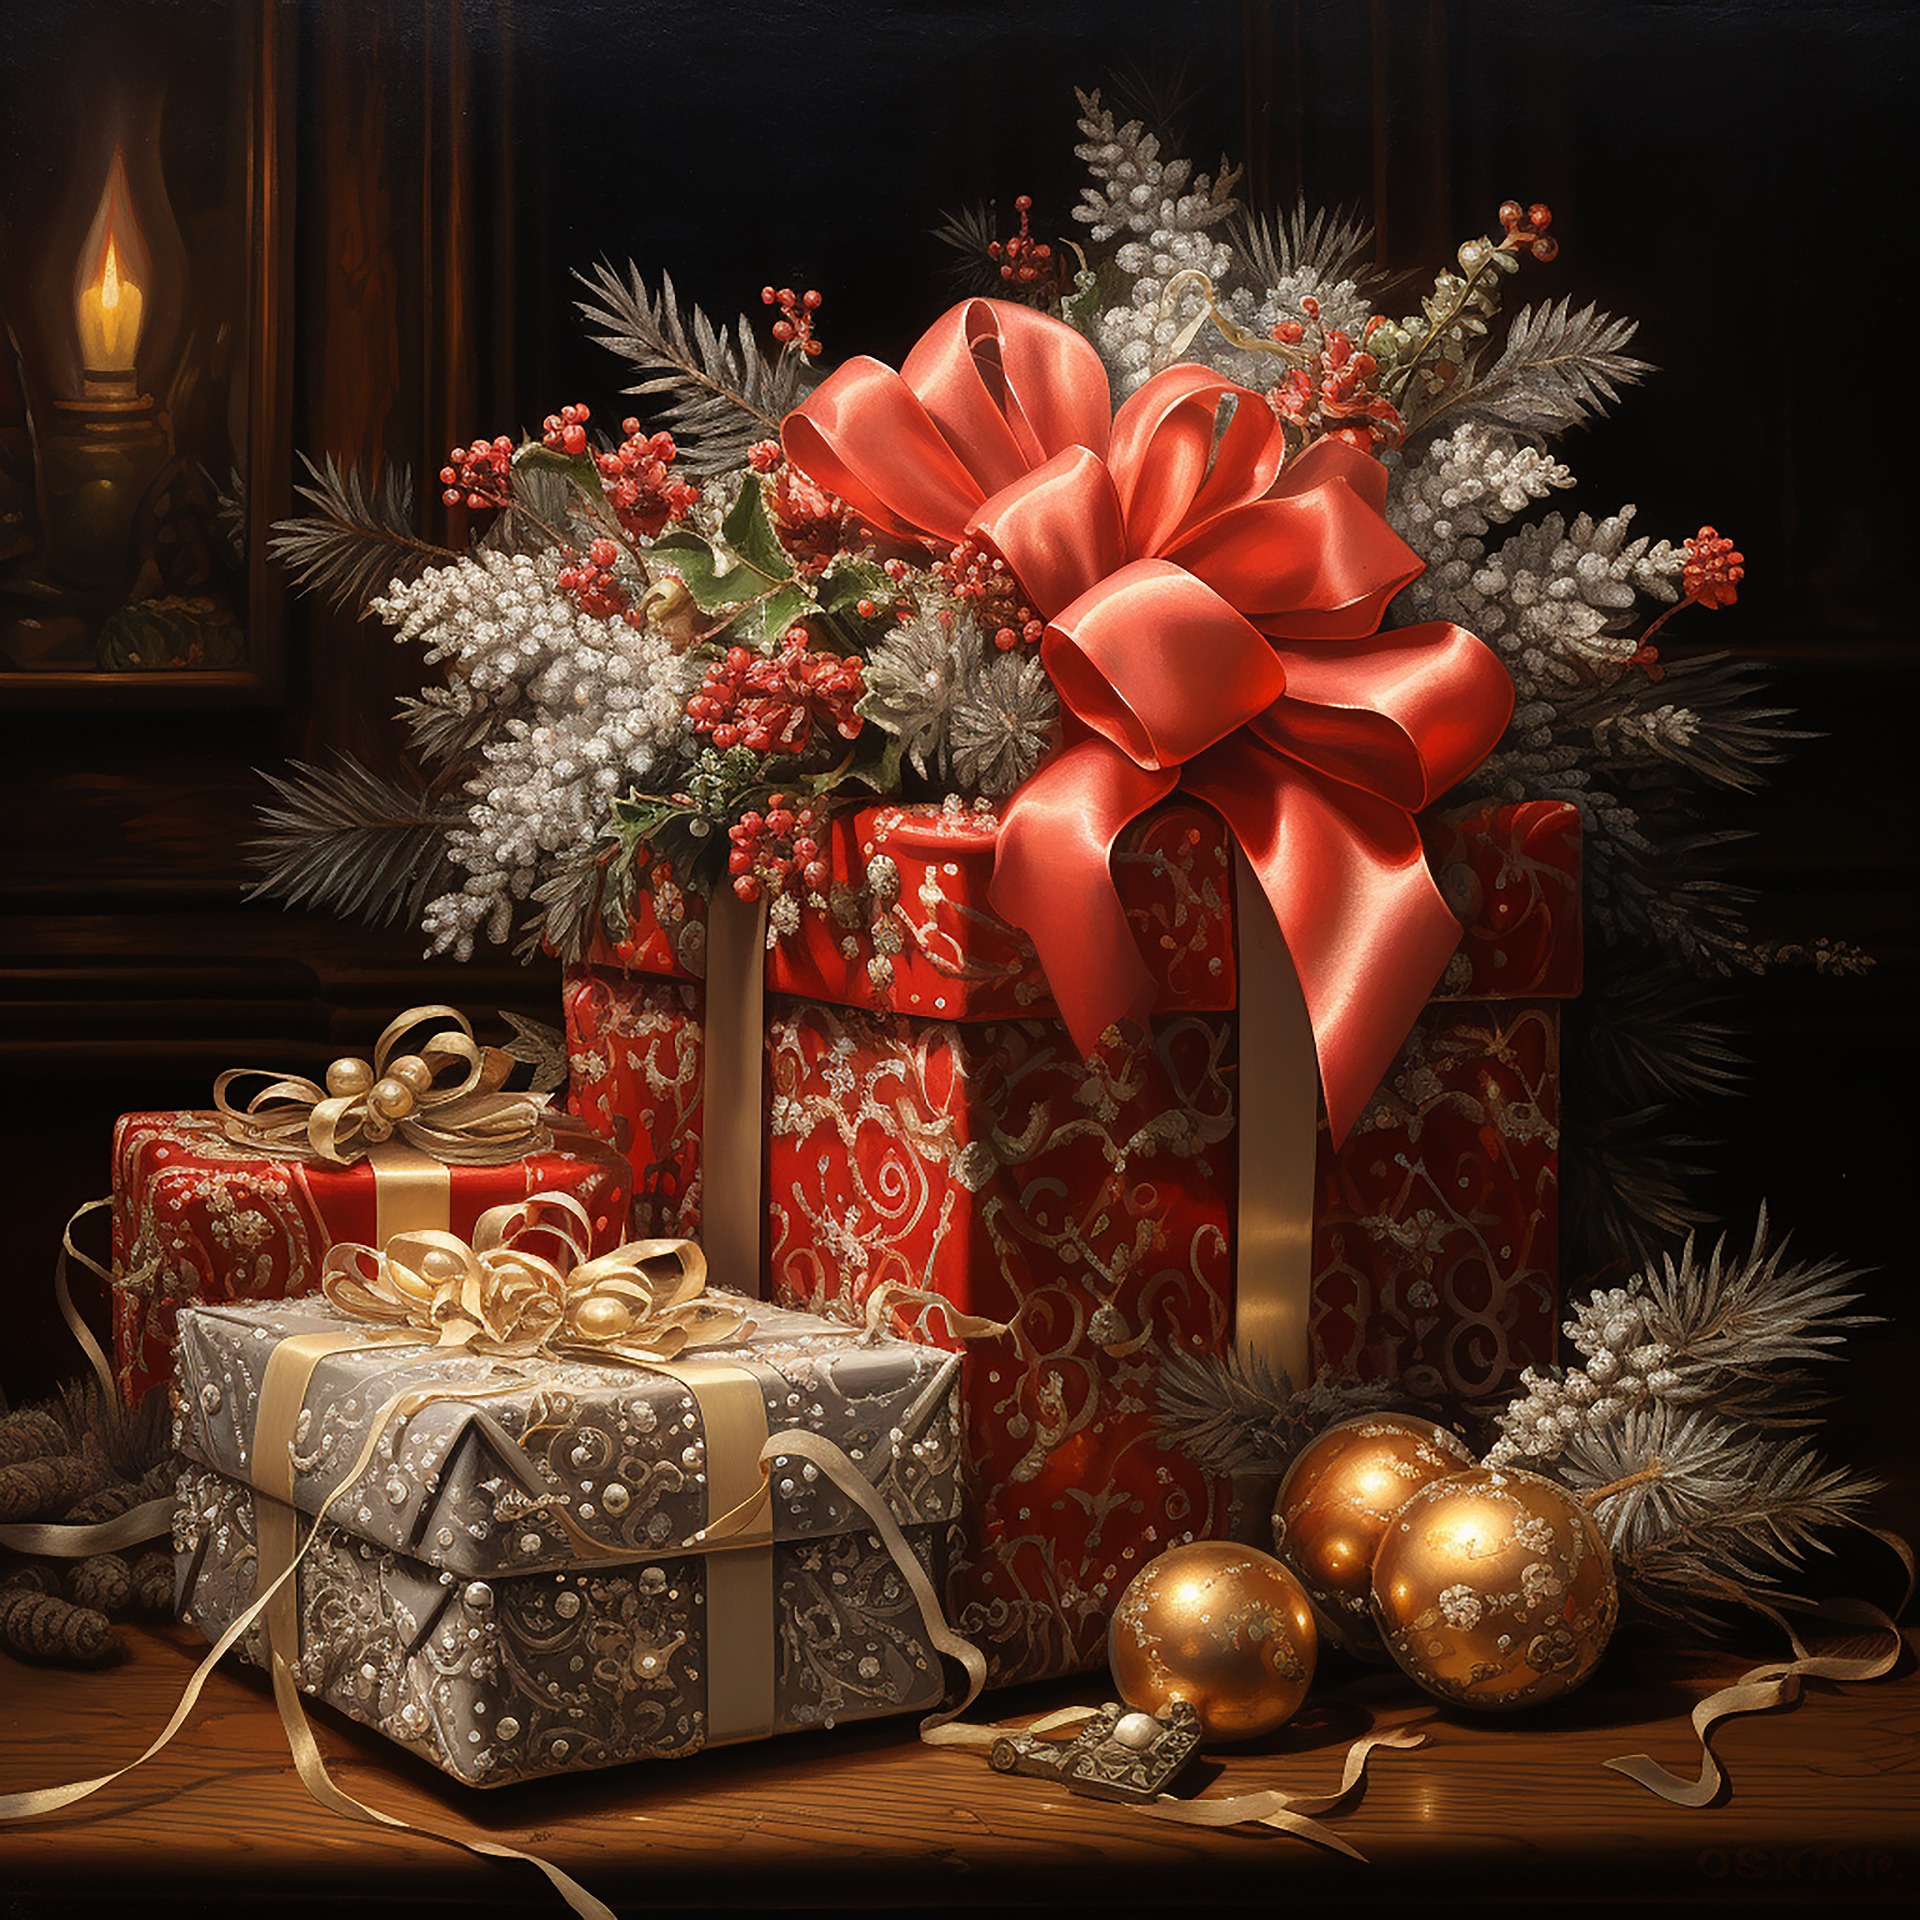 Ordentlich verpackte Geschenkboxen | Quelle: Pixababy